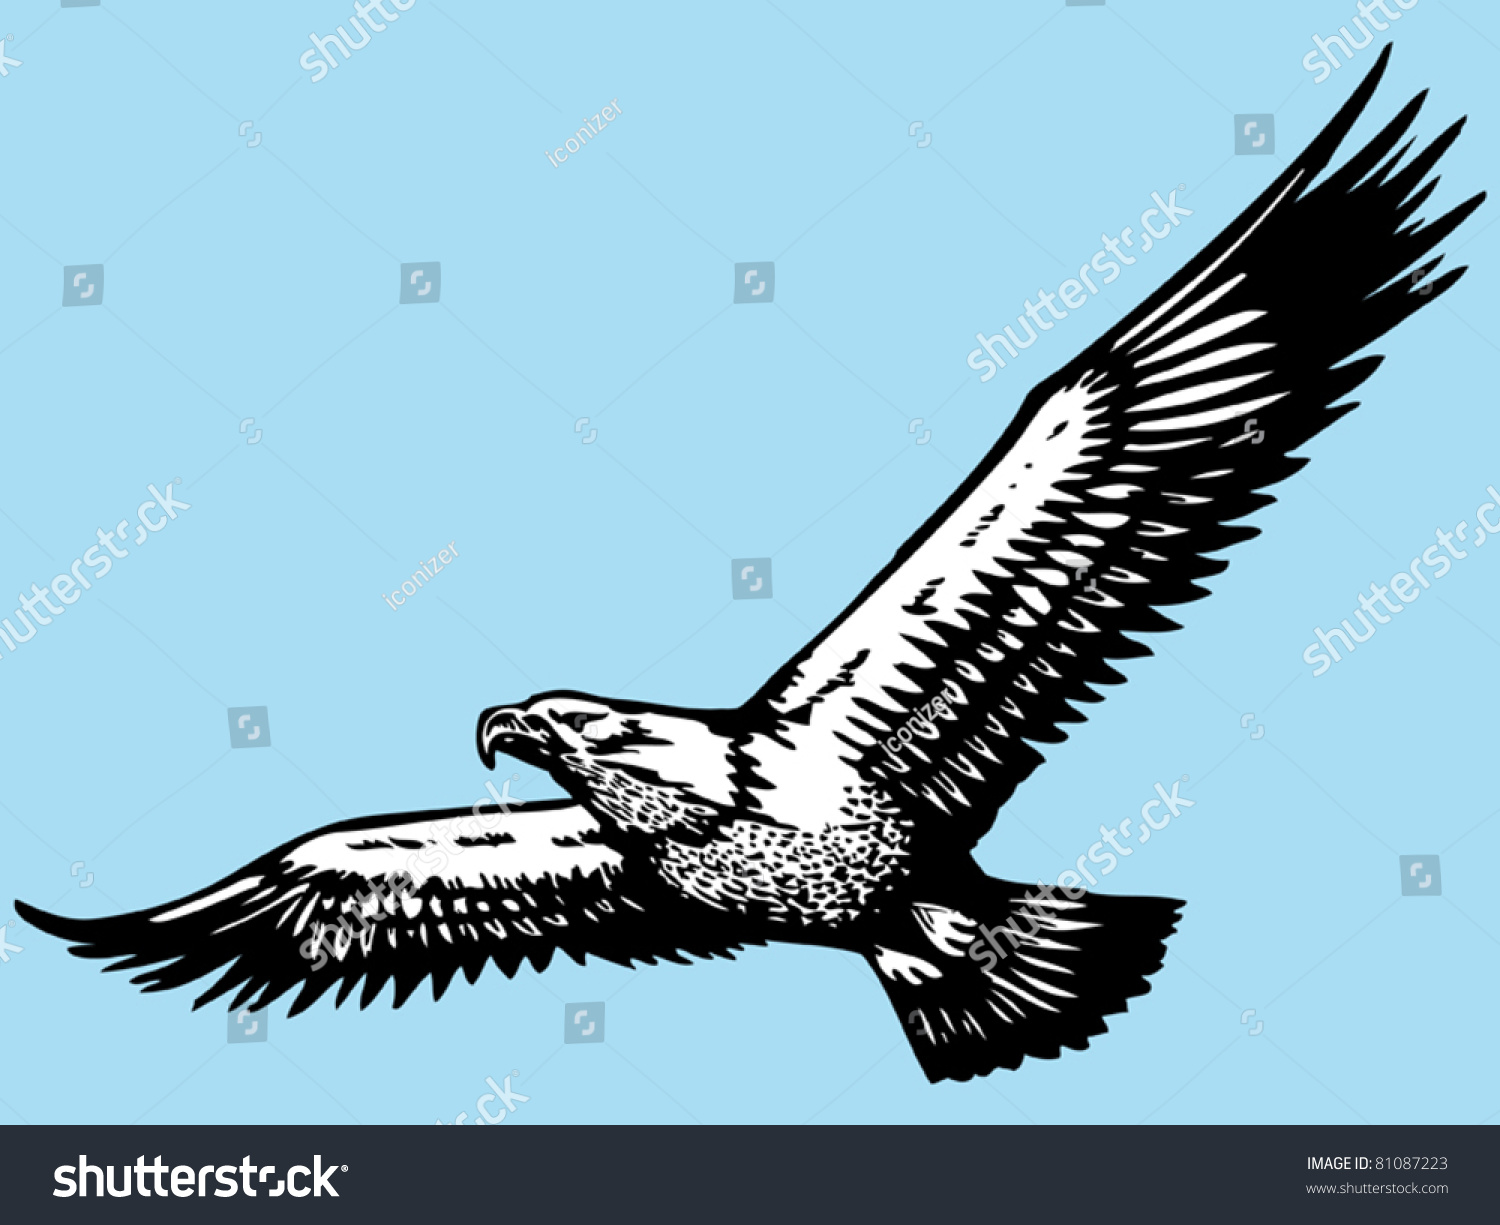 Eagle Hand Drawn Stock Vector Illustration 81087223 : Shutterstock